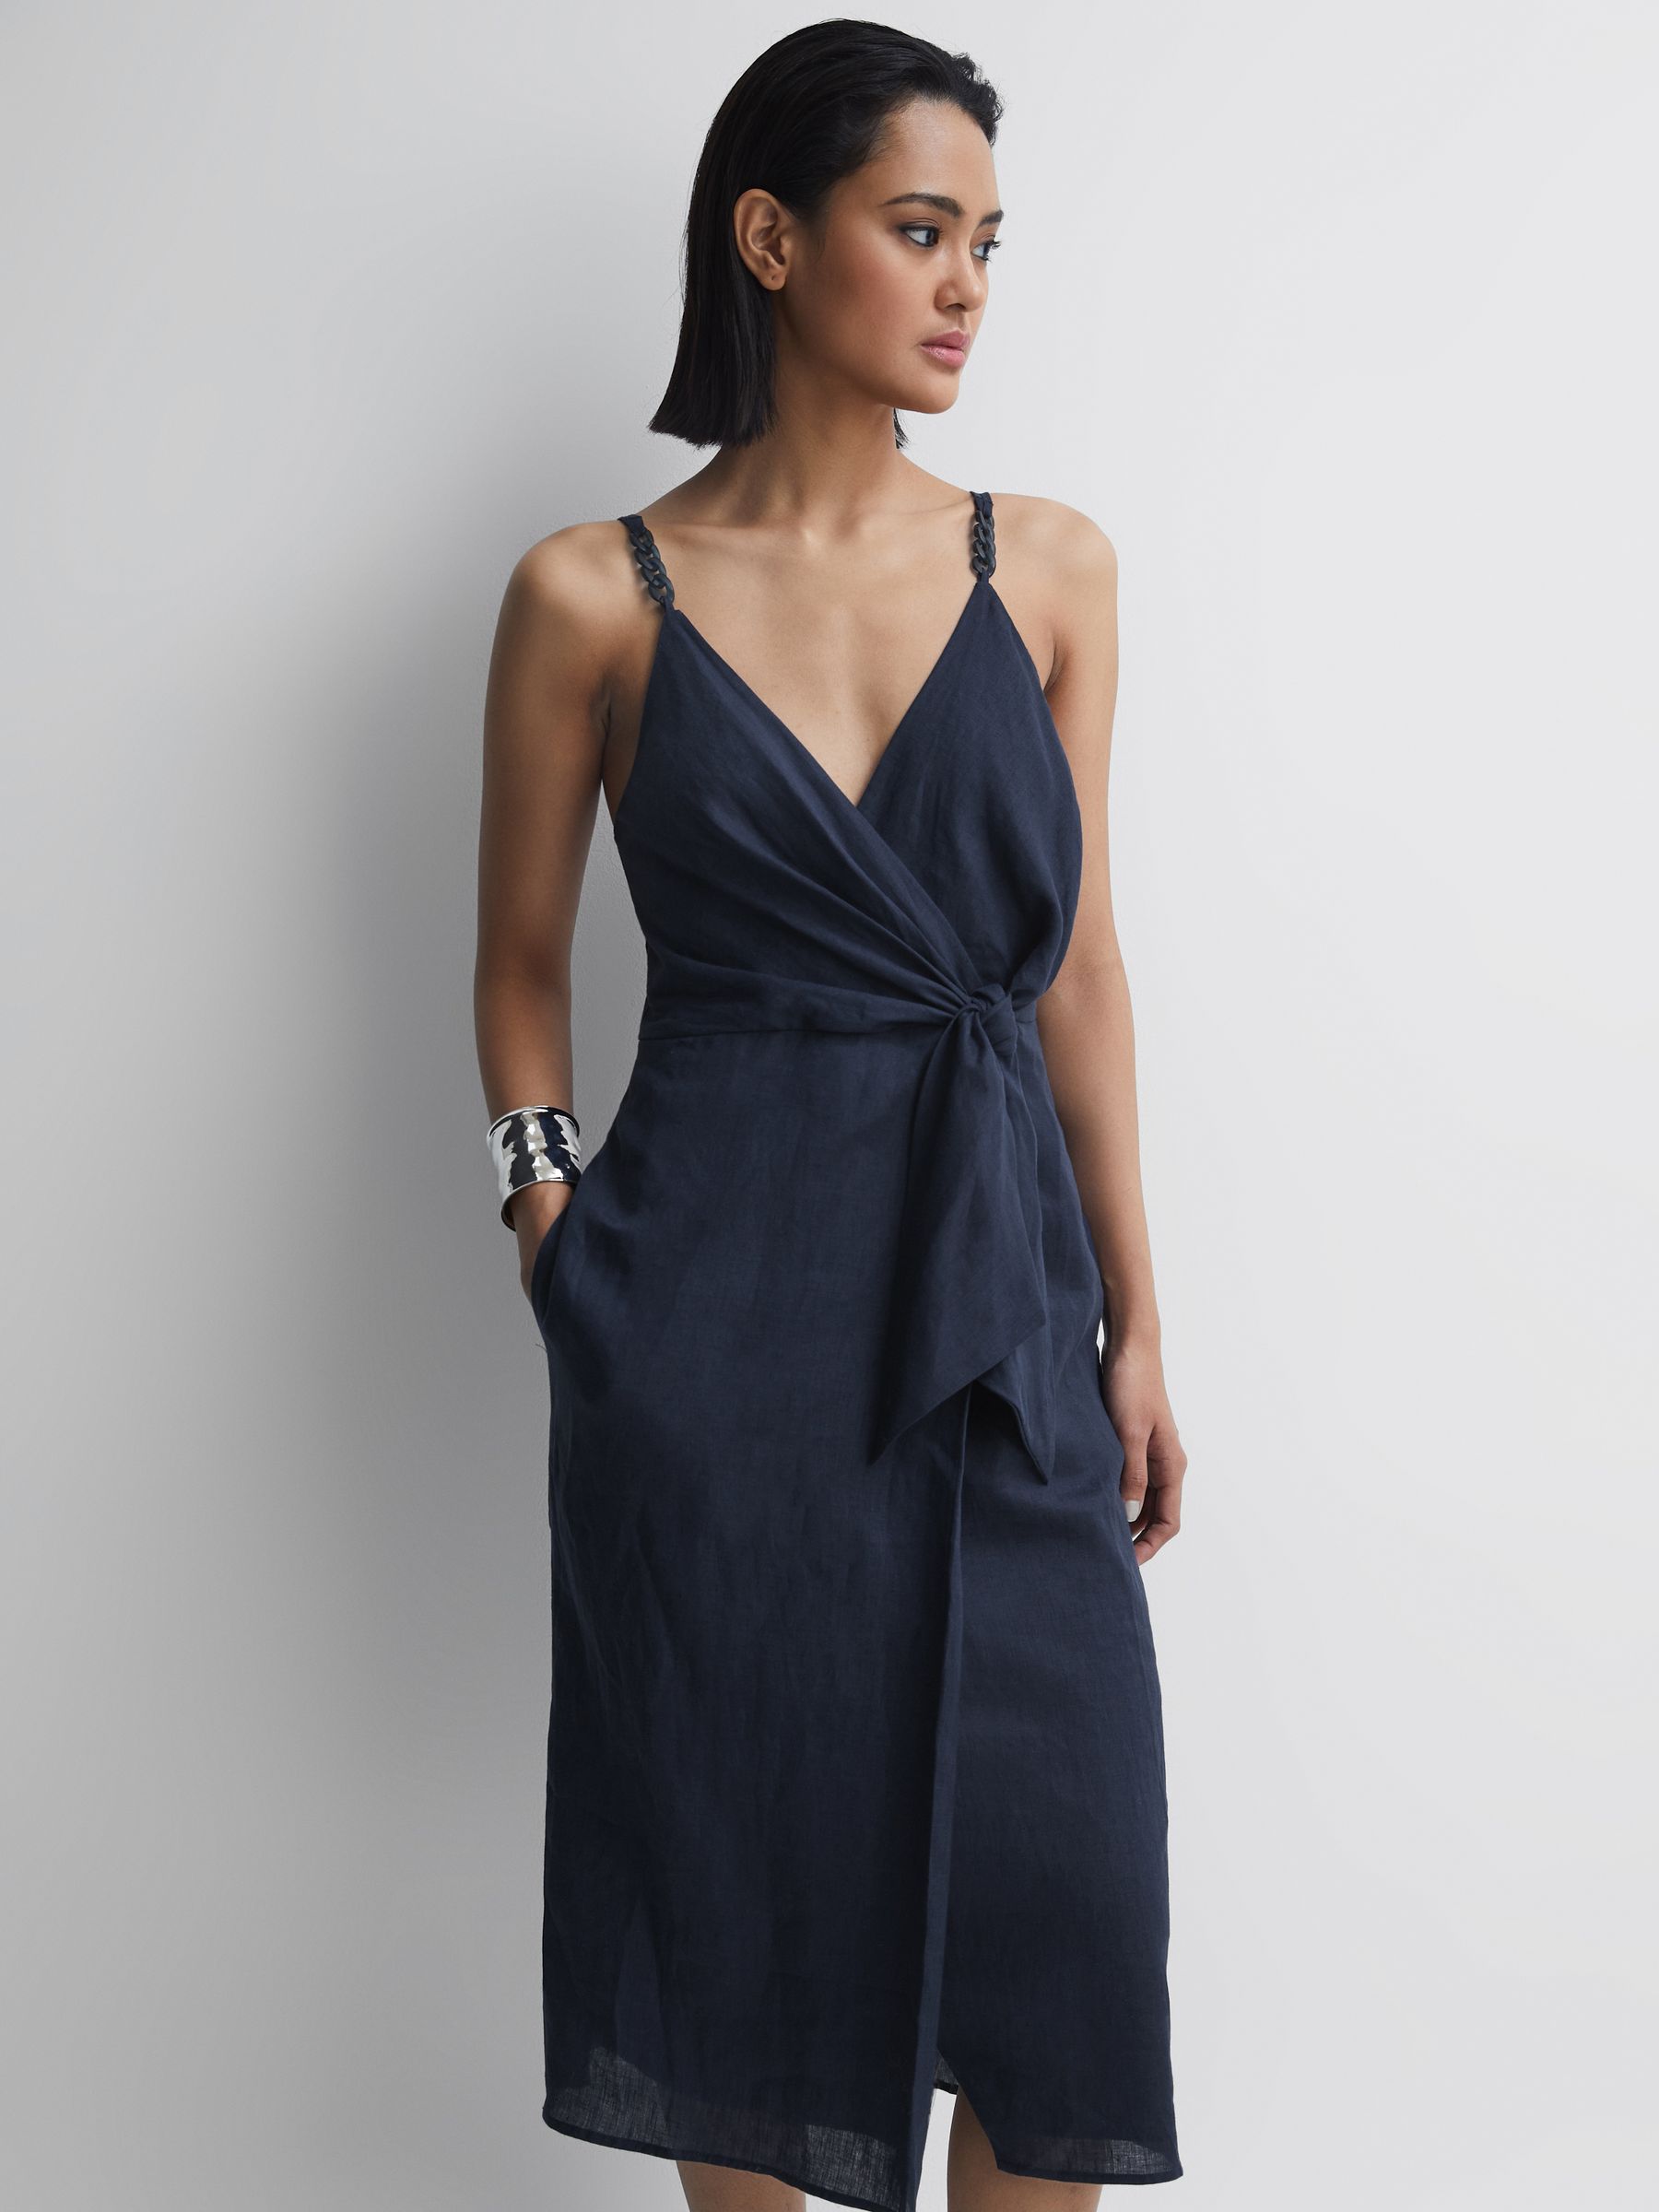 Reiss Esme Linen Side Tie Midi Dress | REISS Australia